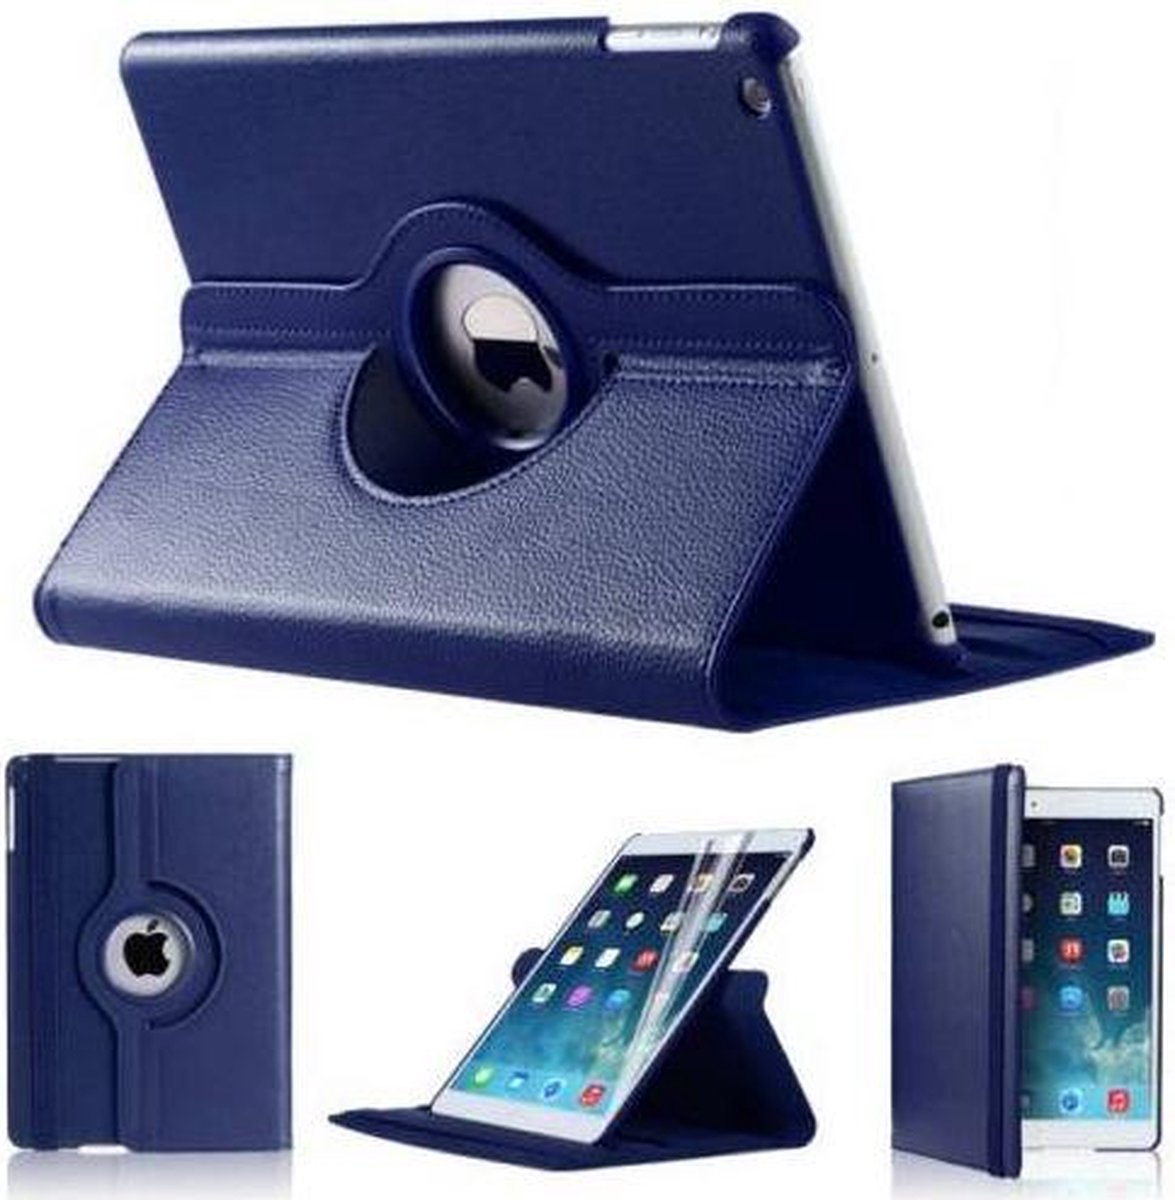 Apple iPad Air (iPad 5) 360 Rotating Case Hoesje Marine Blauw